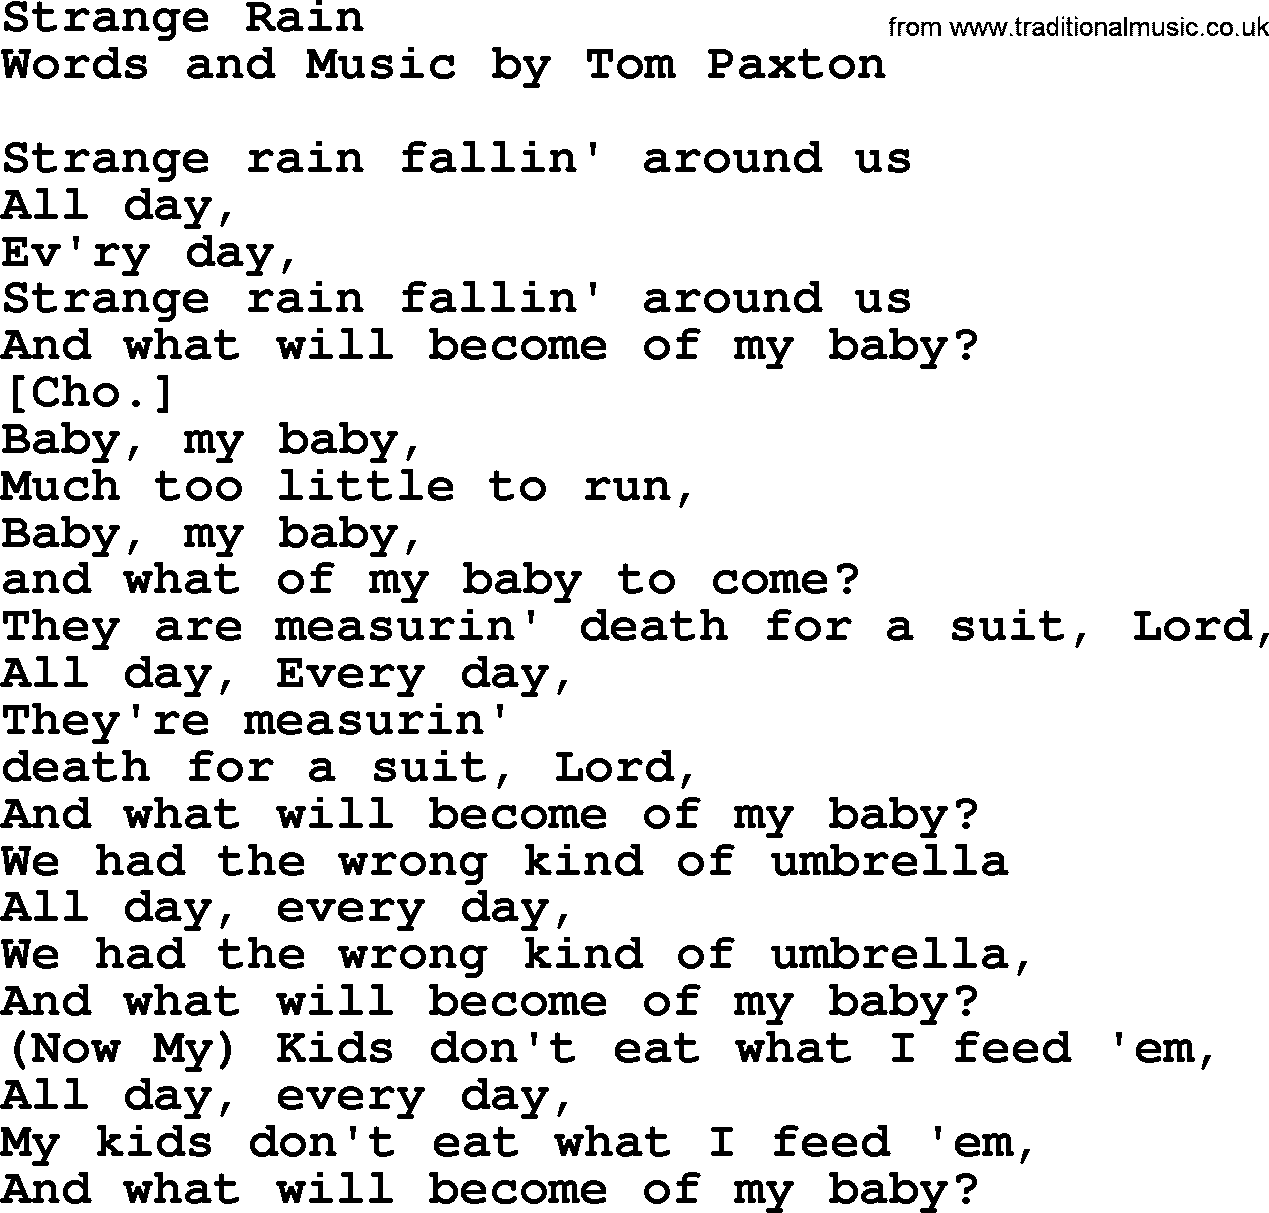 Tom Paxton song: Strange Rain, lyrics